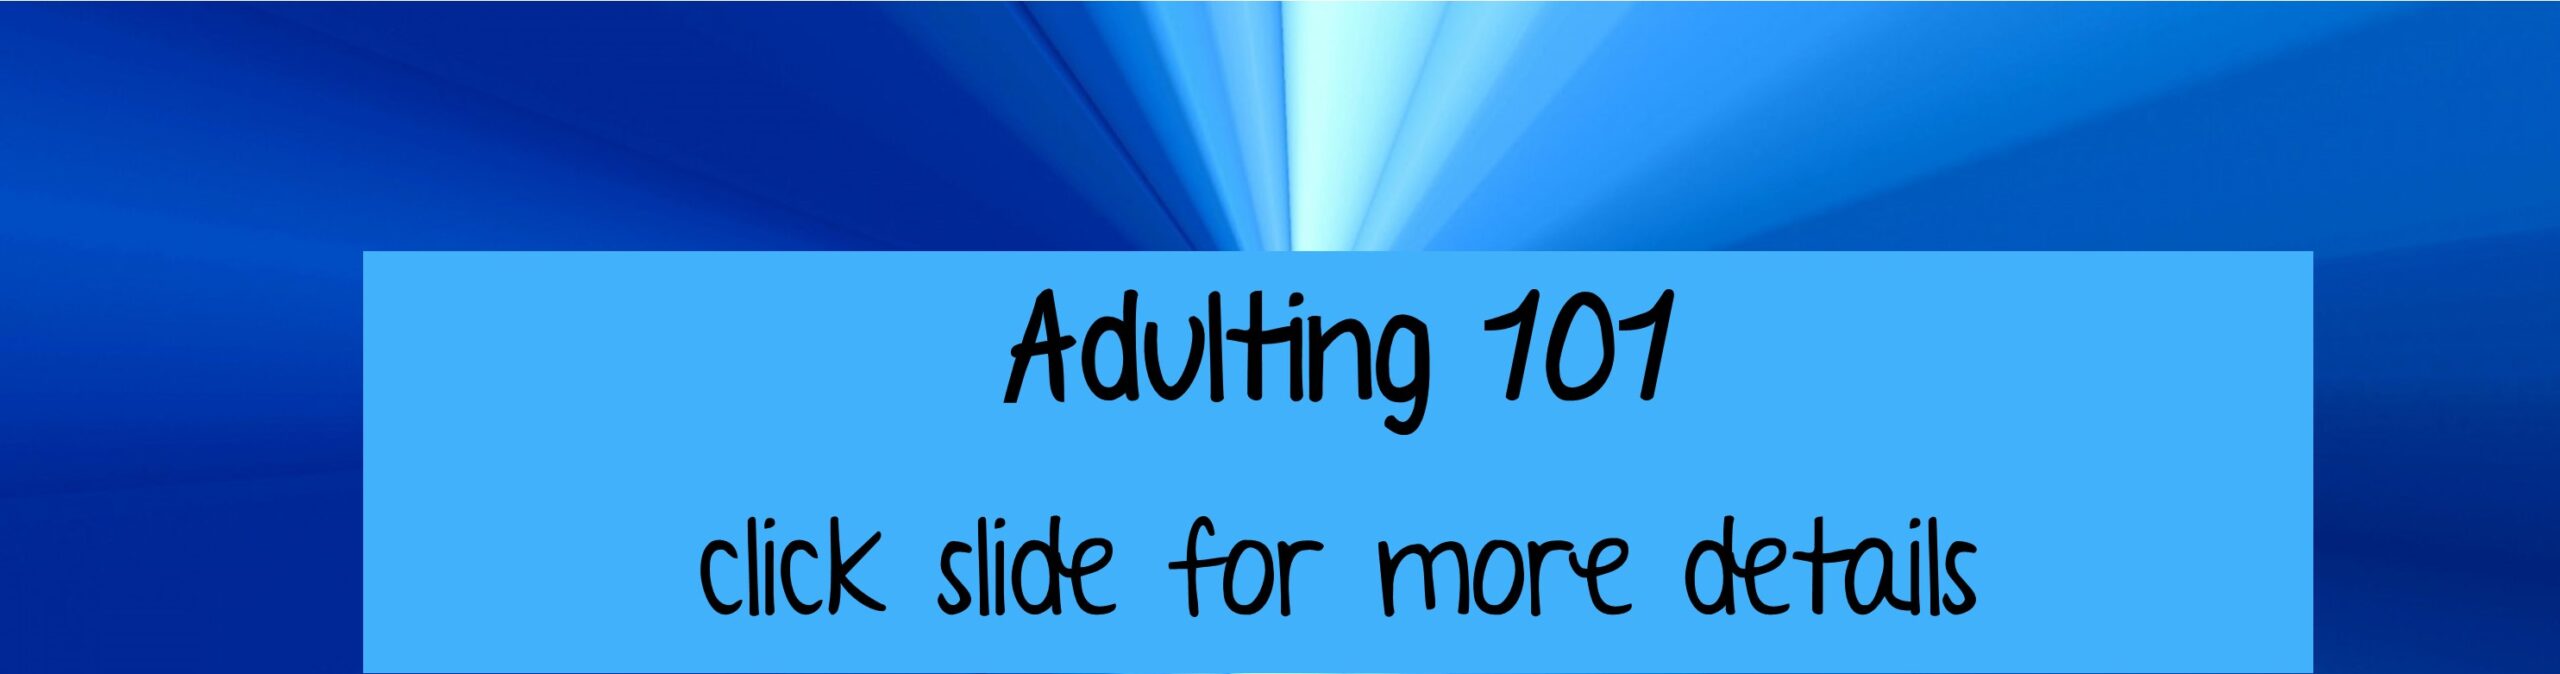 adulting 101 slide